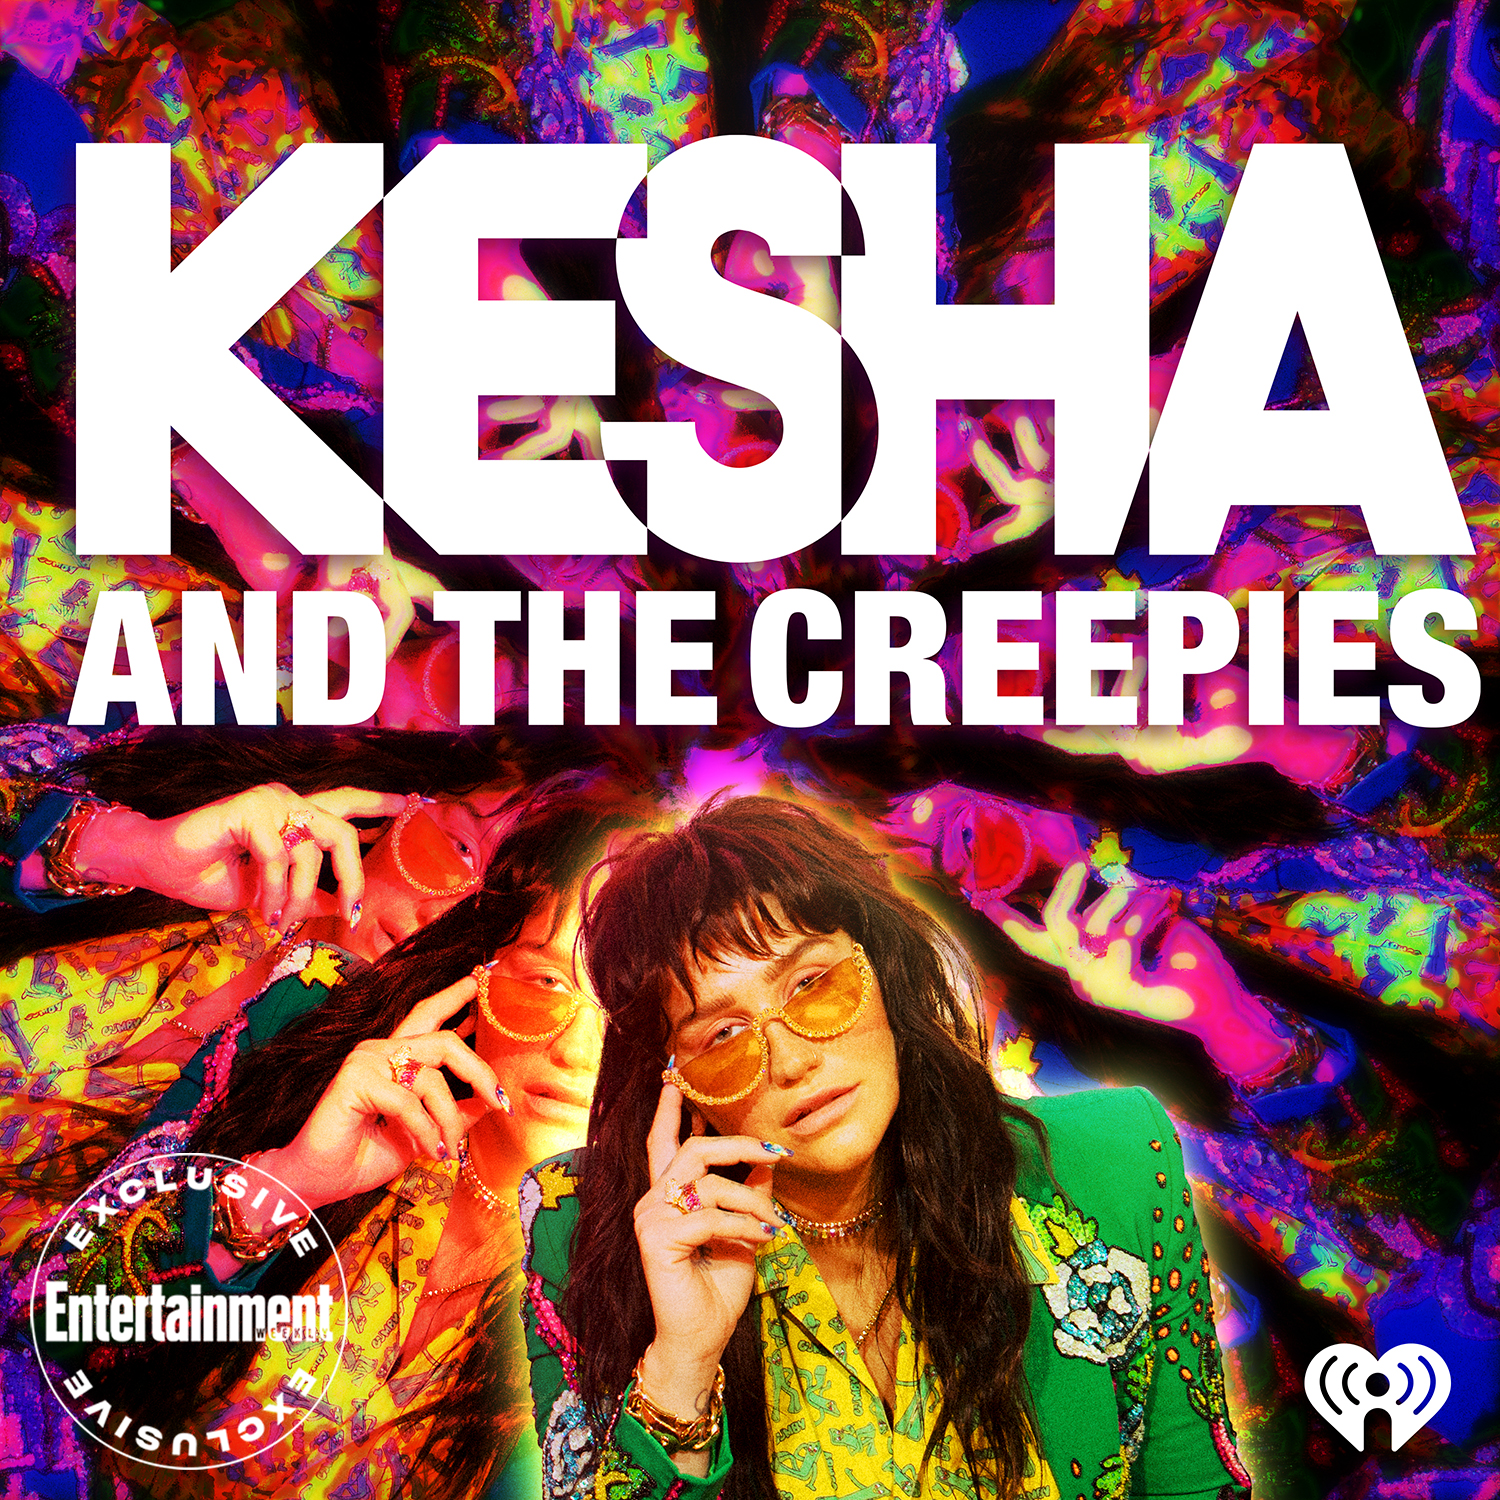 Kesha and the Creepies podcast logoDana Trippe for iHeartMedia